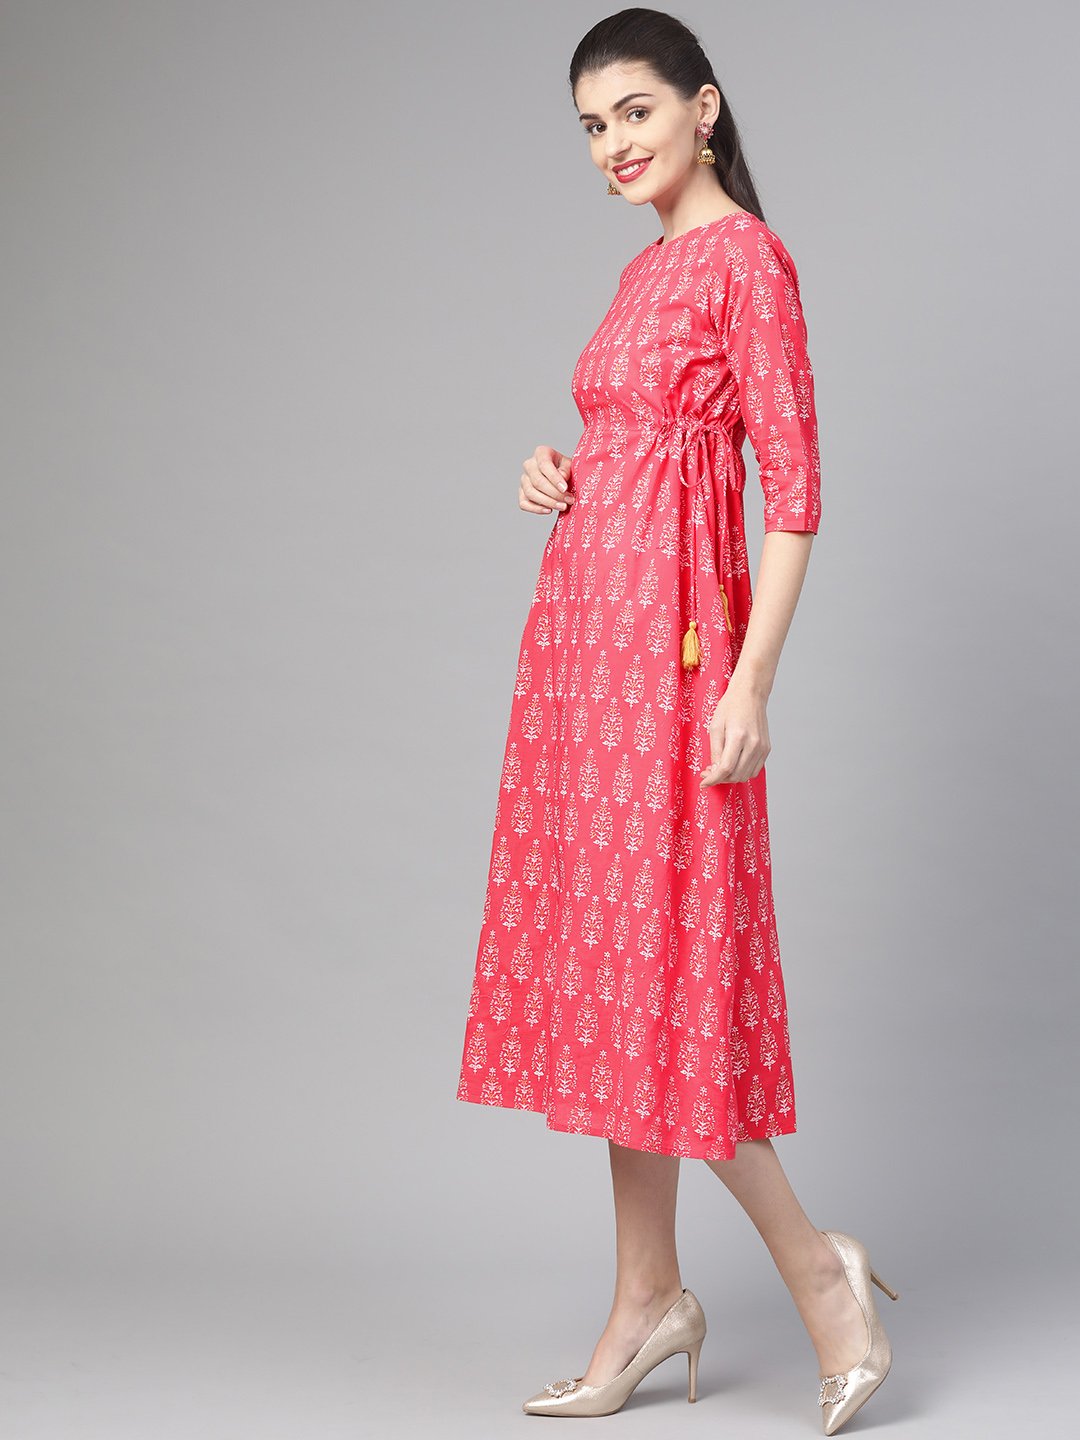 Women's Nayo Pink & Gold Ethnic Motifs Printed Maxi Dress - Nayo Clothing